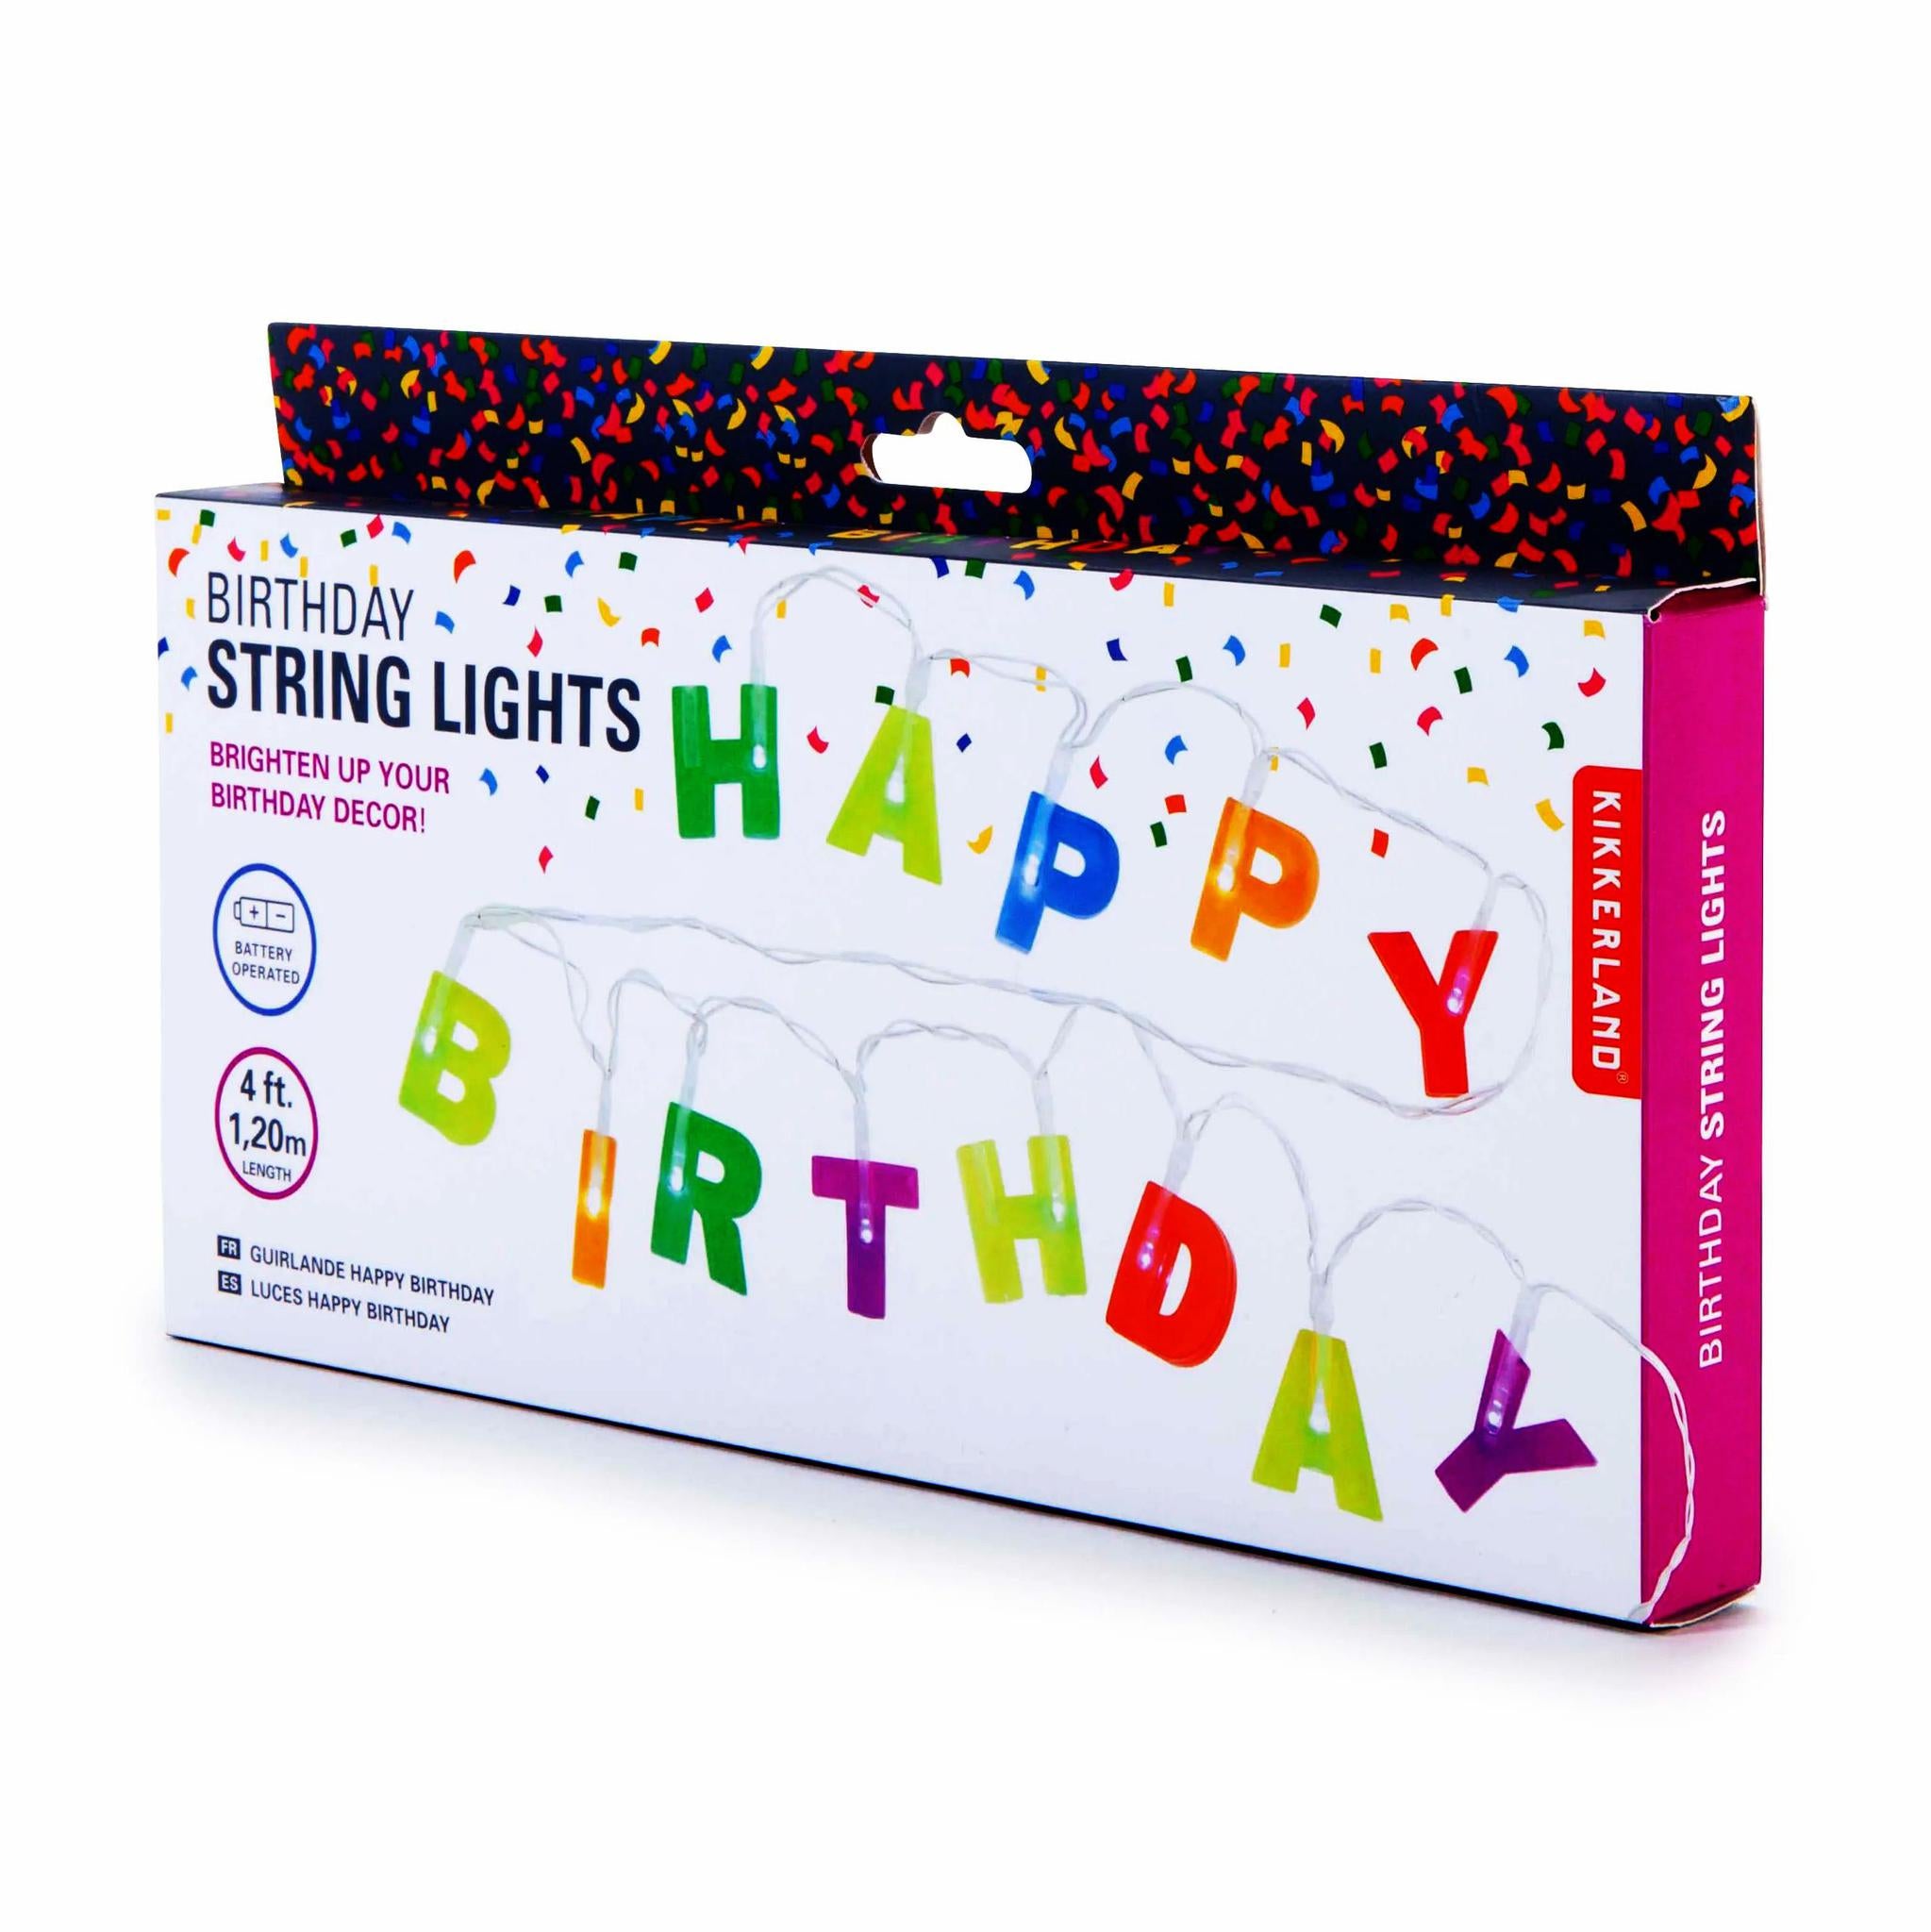 "Birthday Party in a Box" Treasure Gift Box